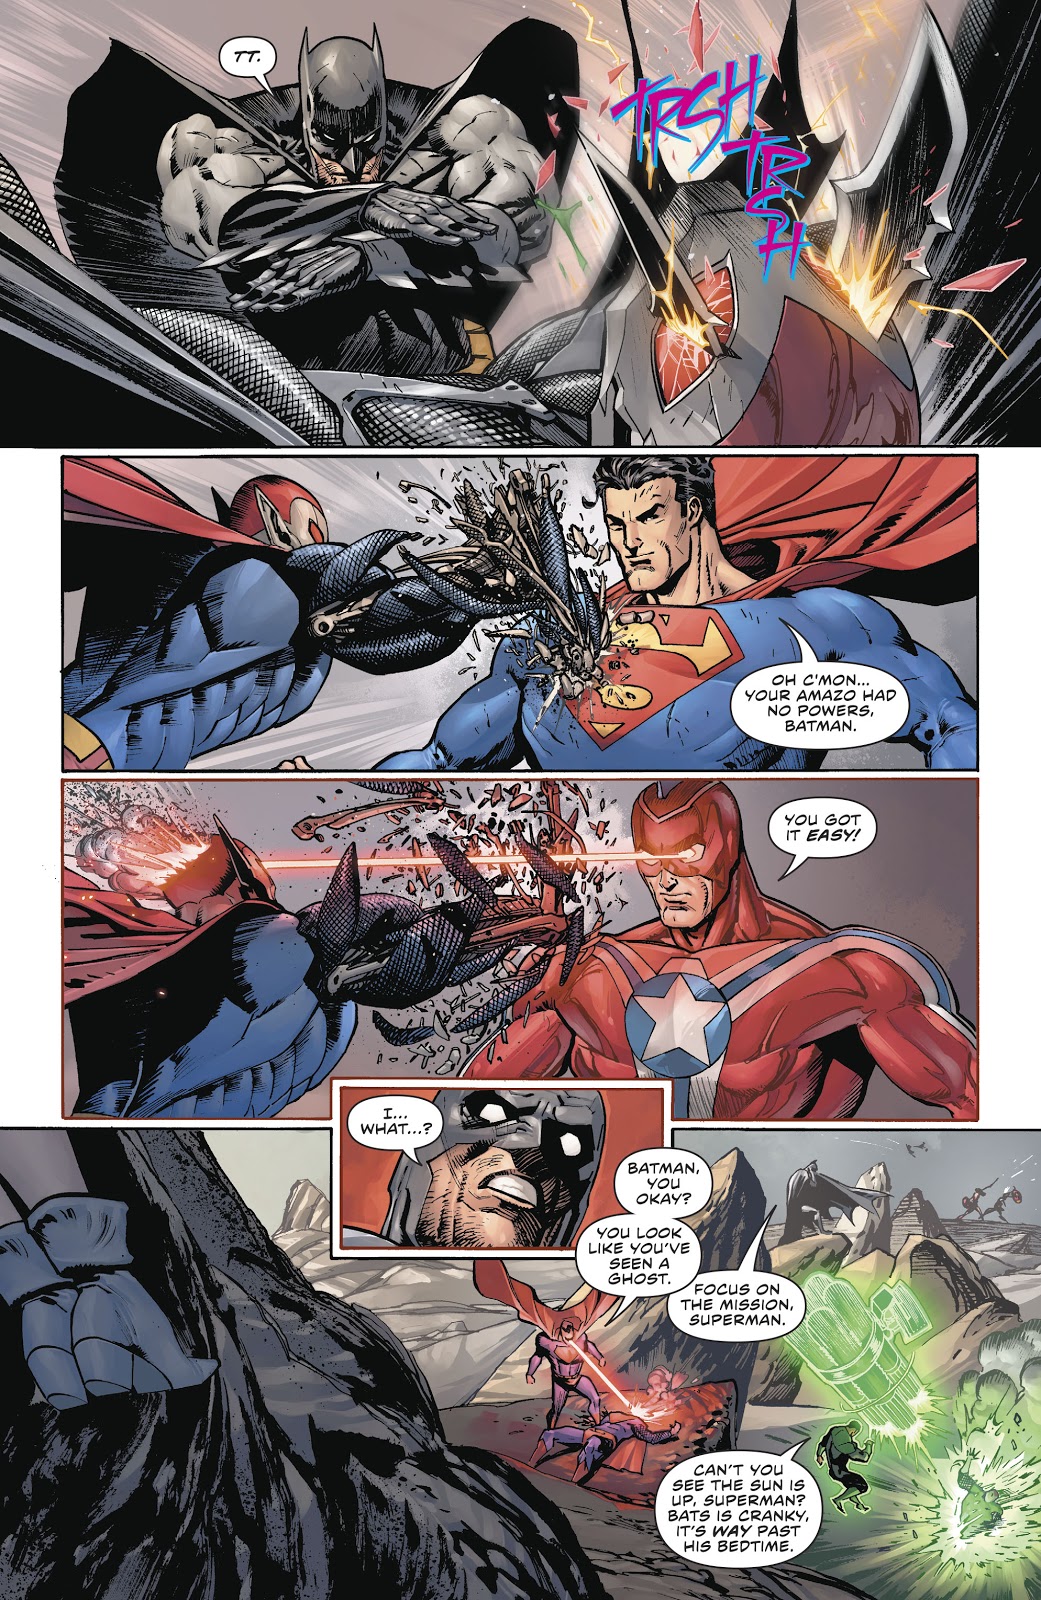 Justice League VS Justice League Of Amazo